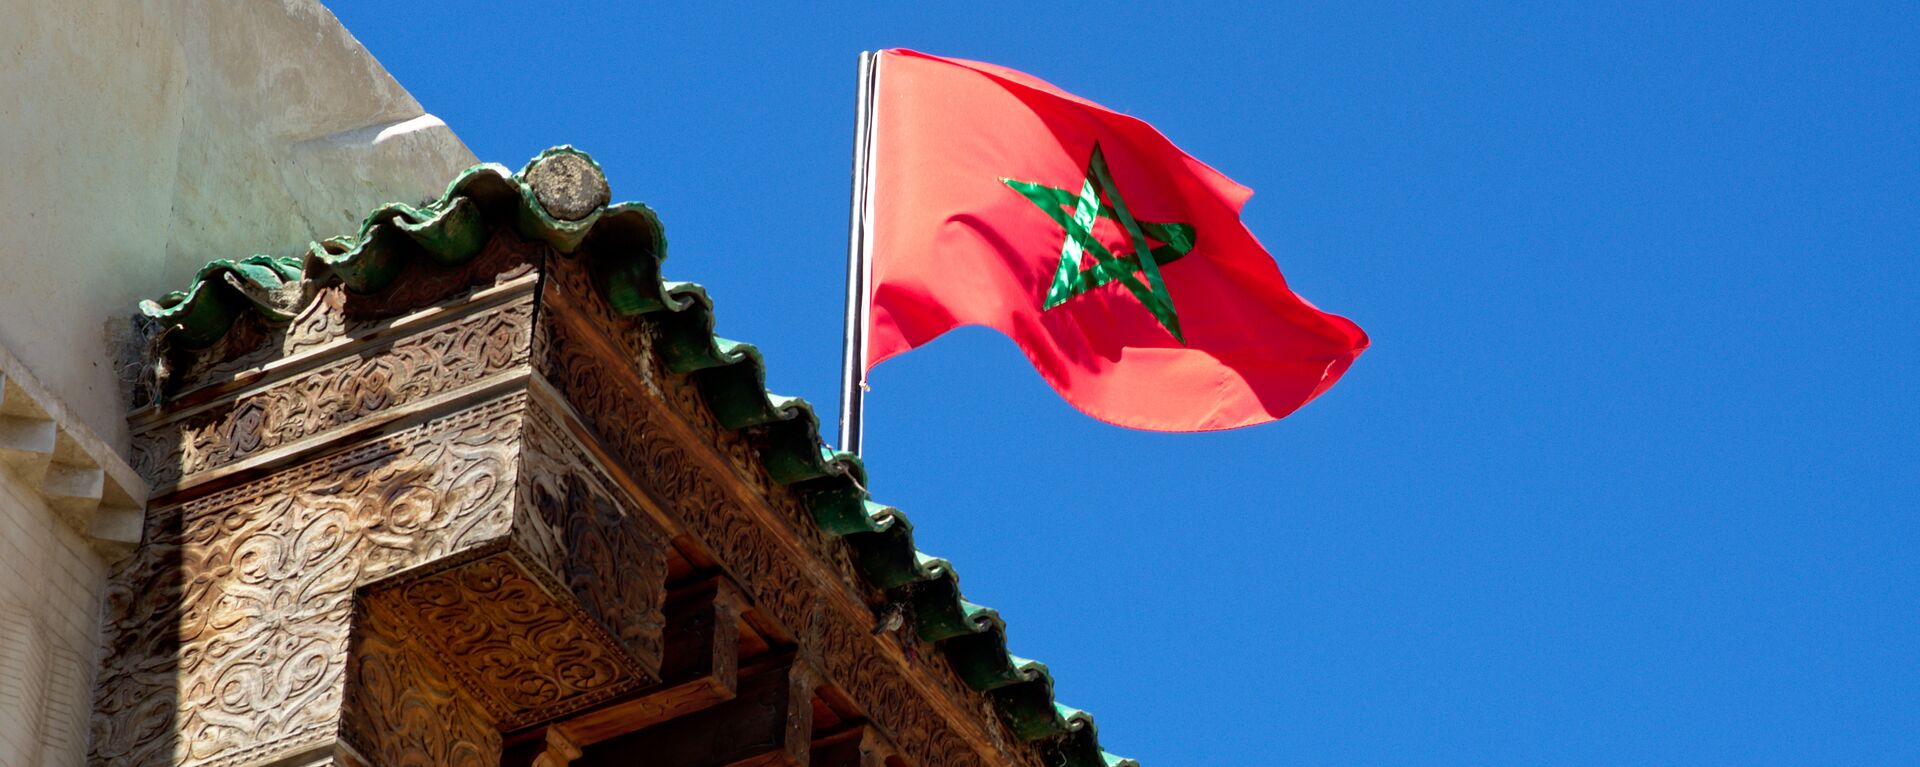 La bandera de Marruecos - Sputnik Mundo, 1920, 11.12.2020